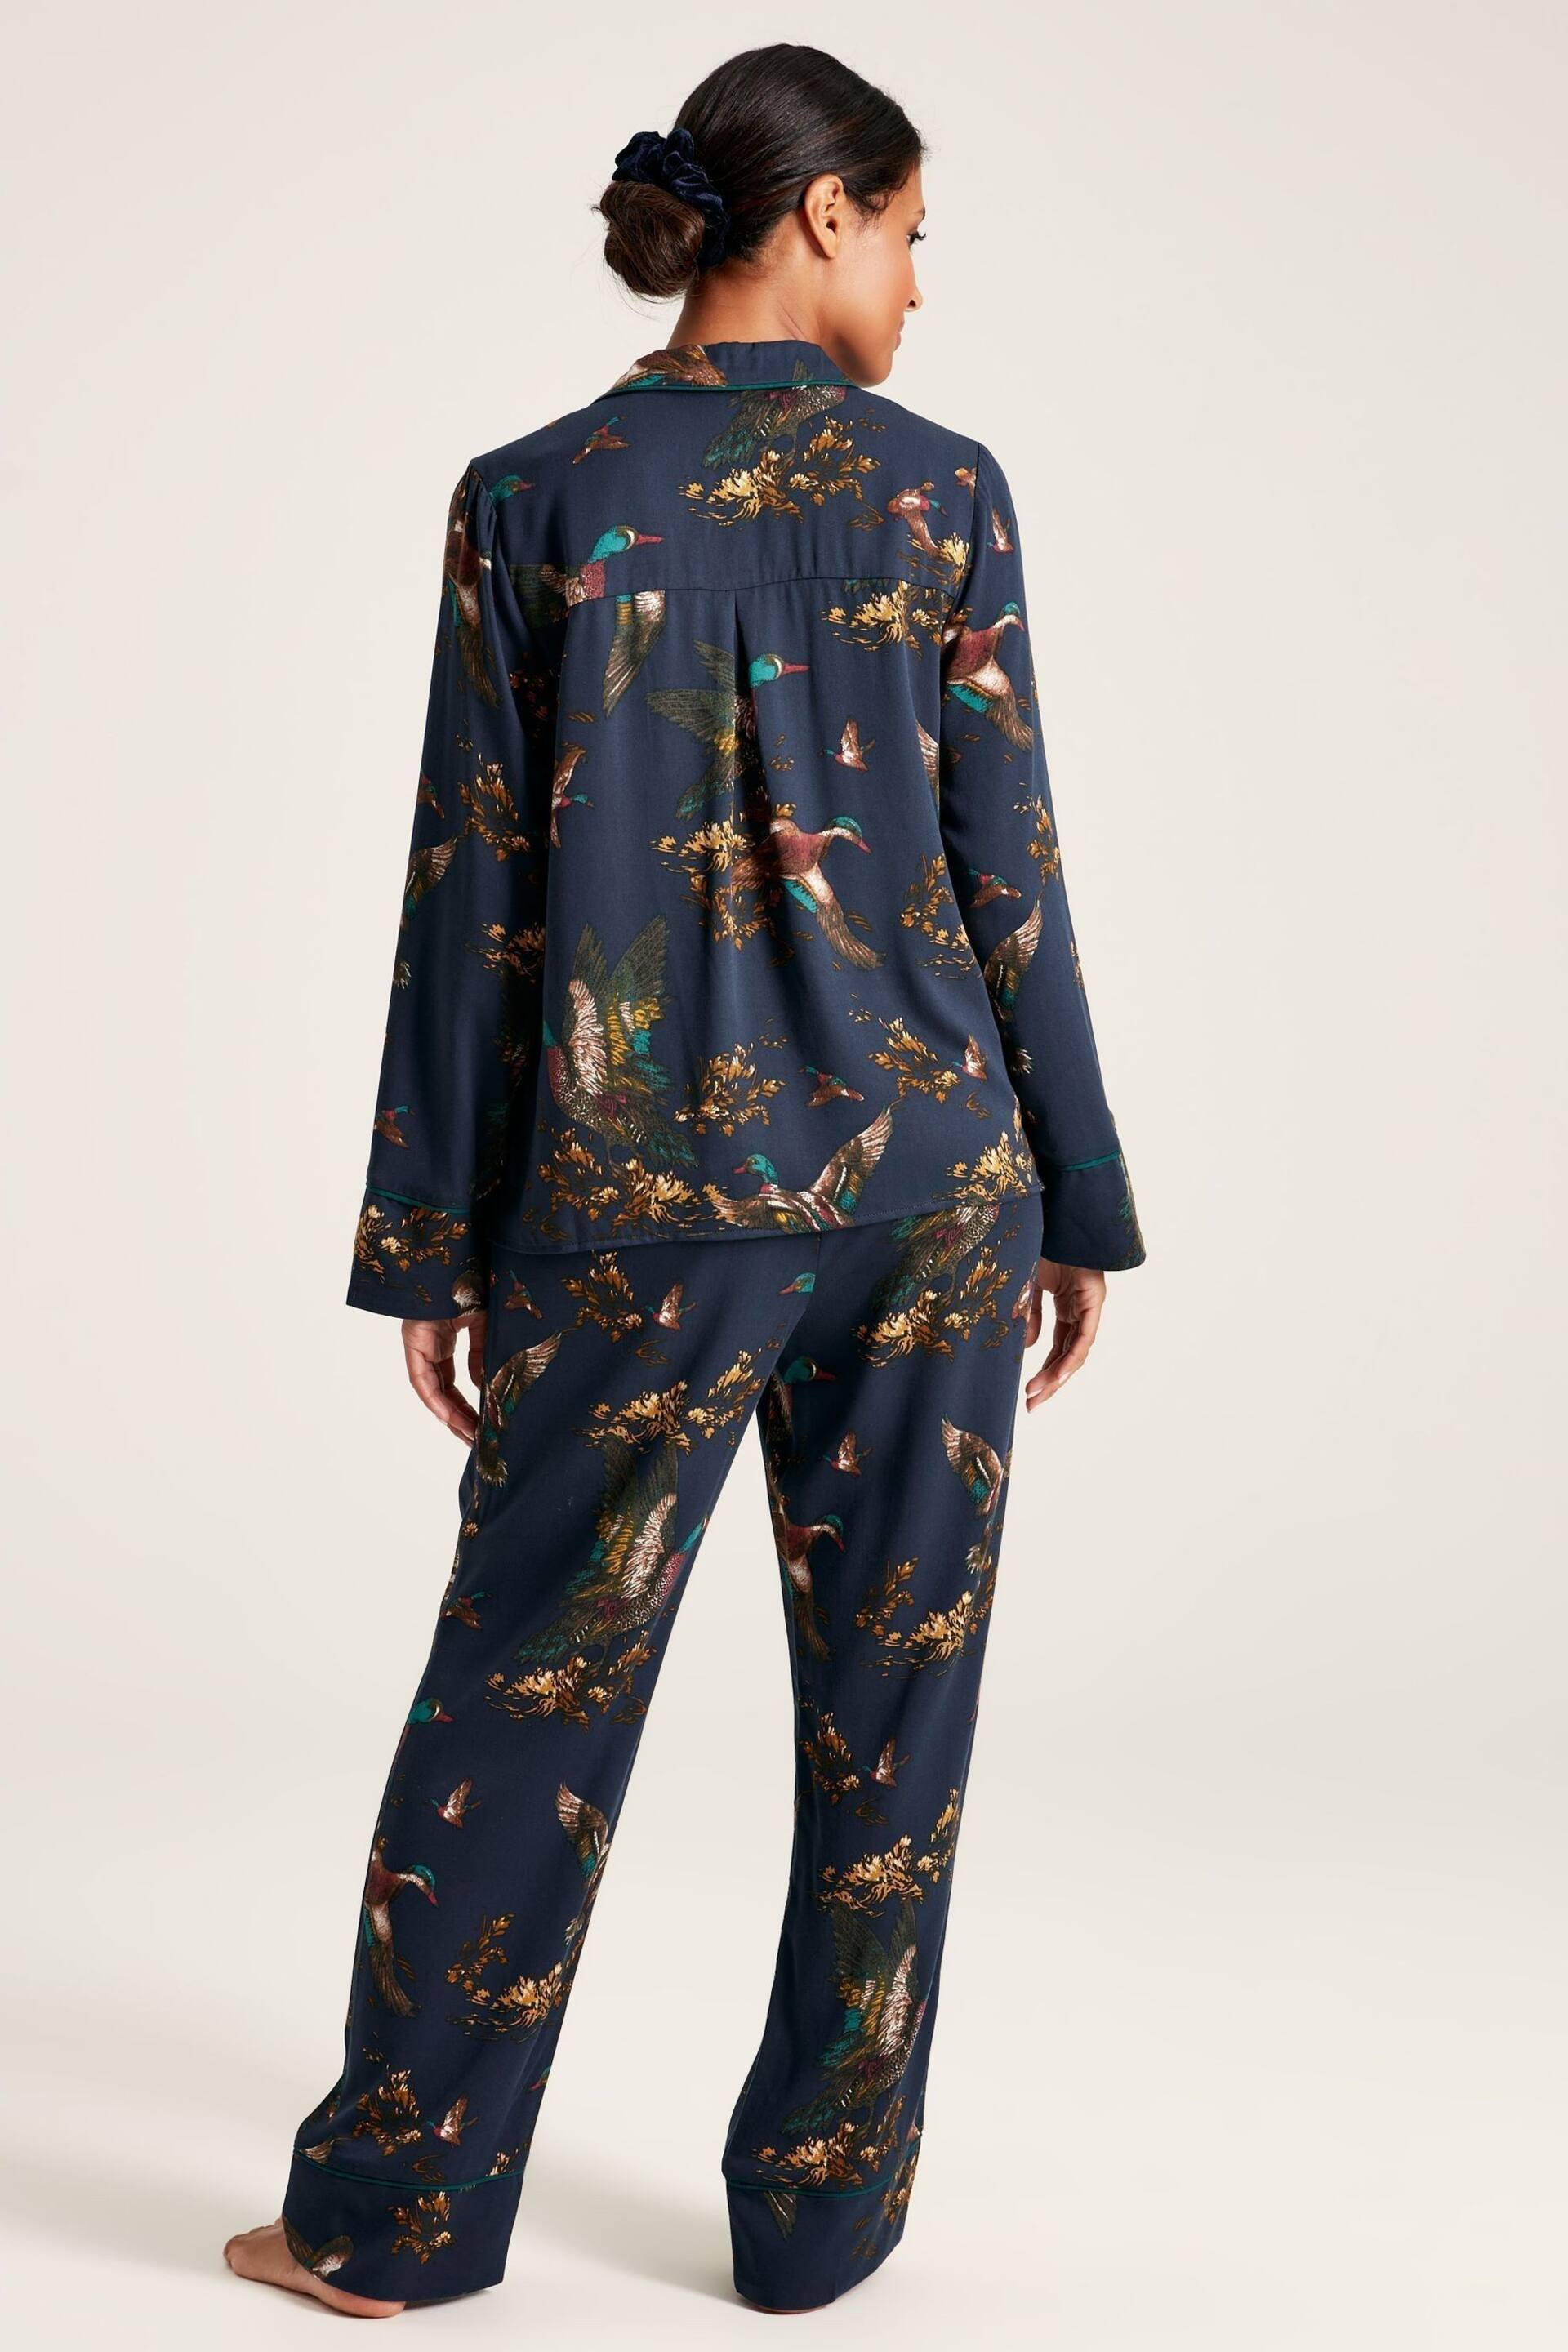 Joules Alma Navy Pyjama Set - Image 2 of 6